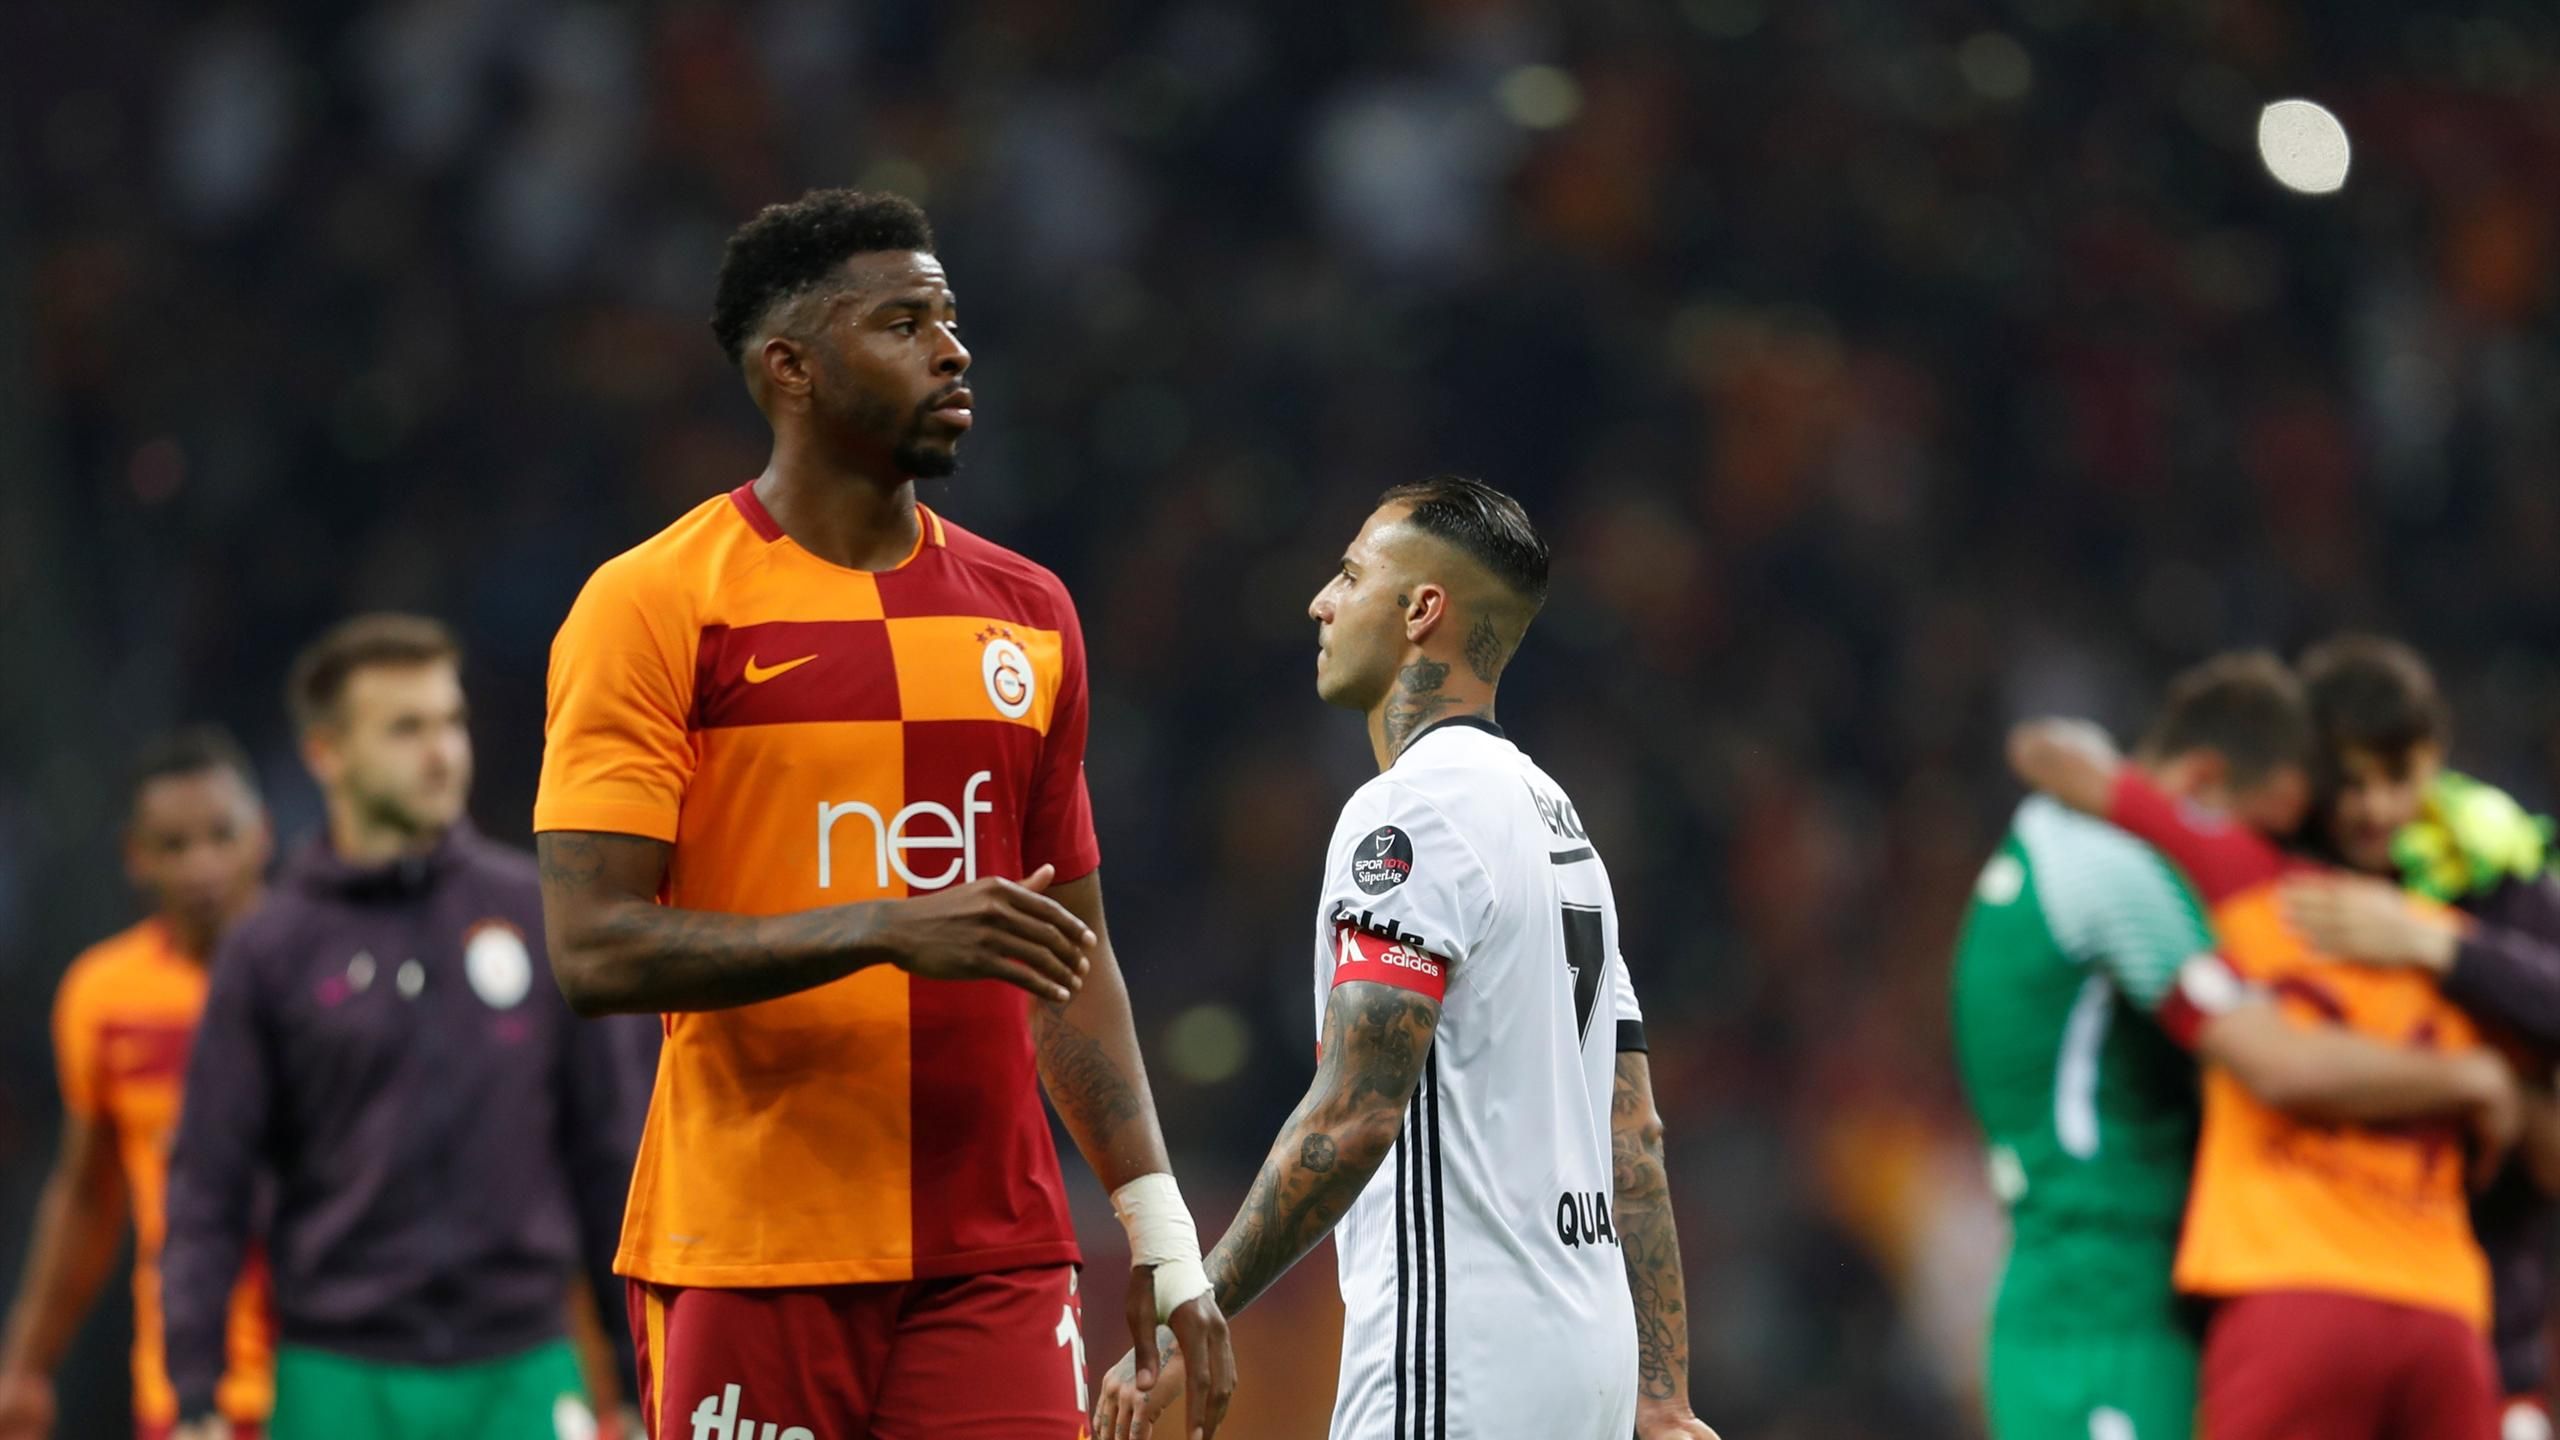 Galatasaray vs. Besiktas: Live Stream, TV Channel, Start Time